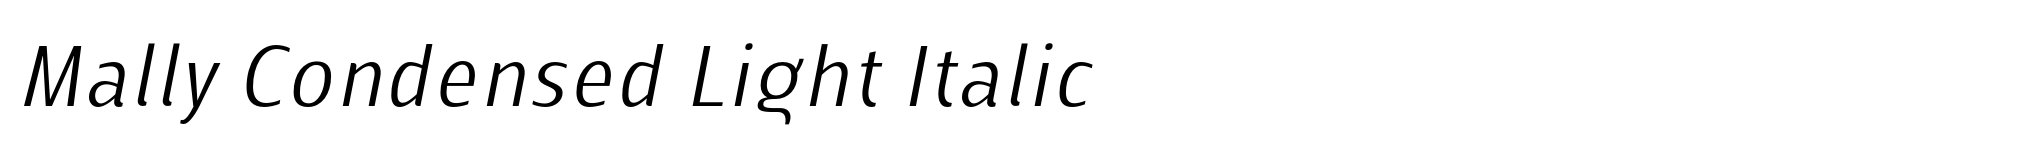 Mally Condensed Light Italic image